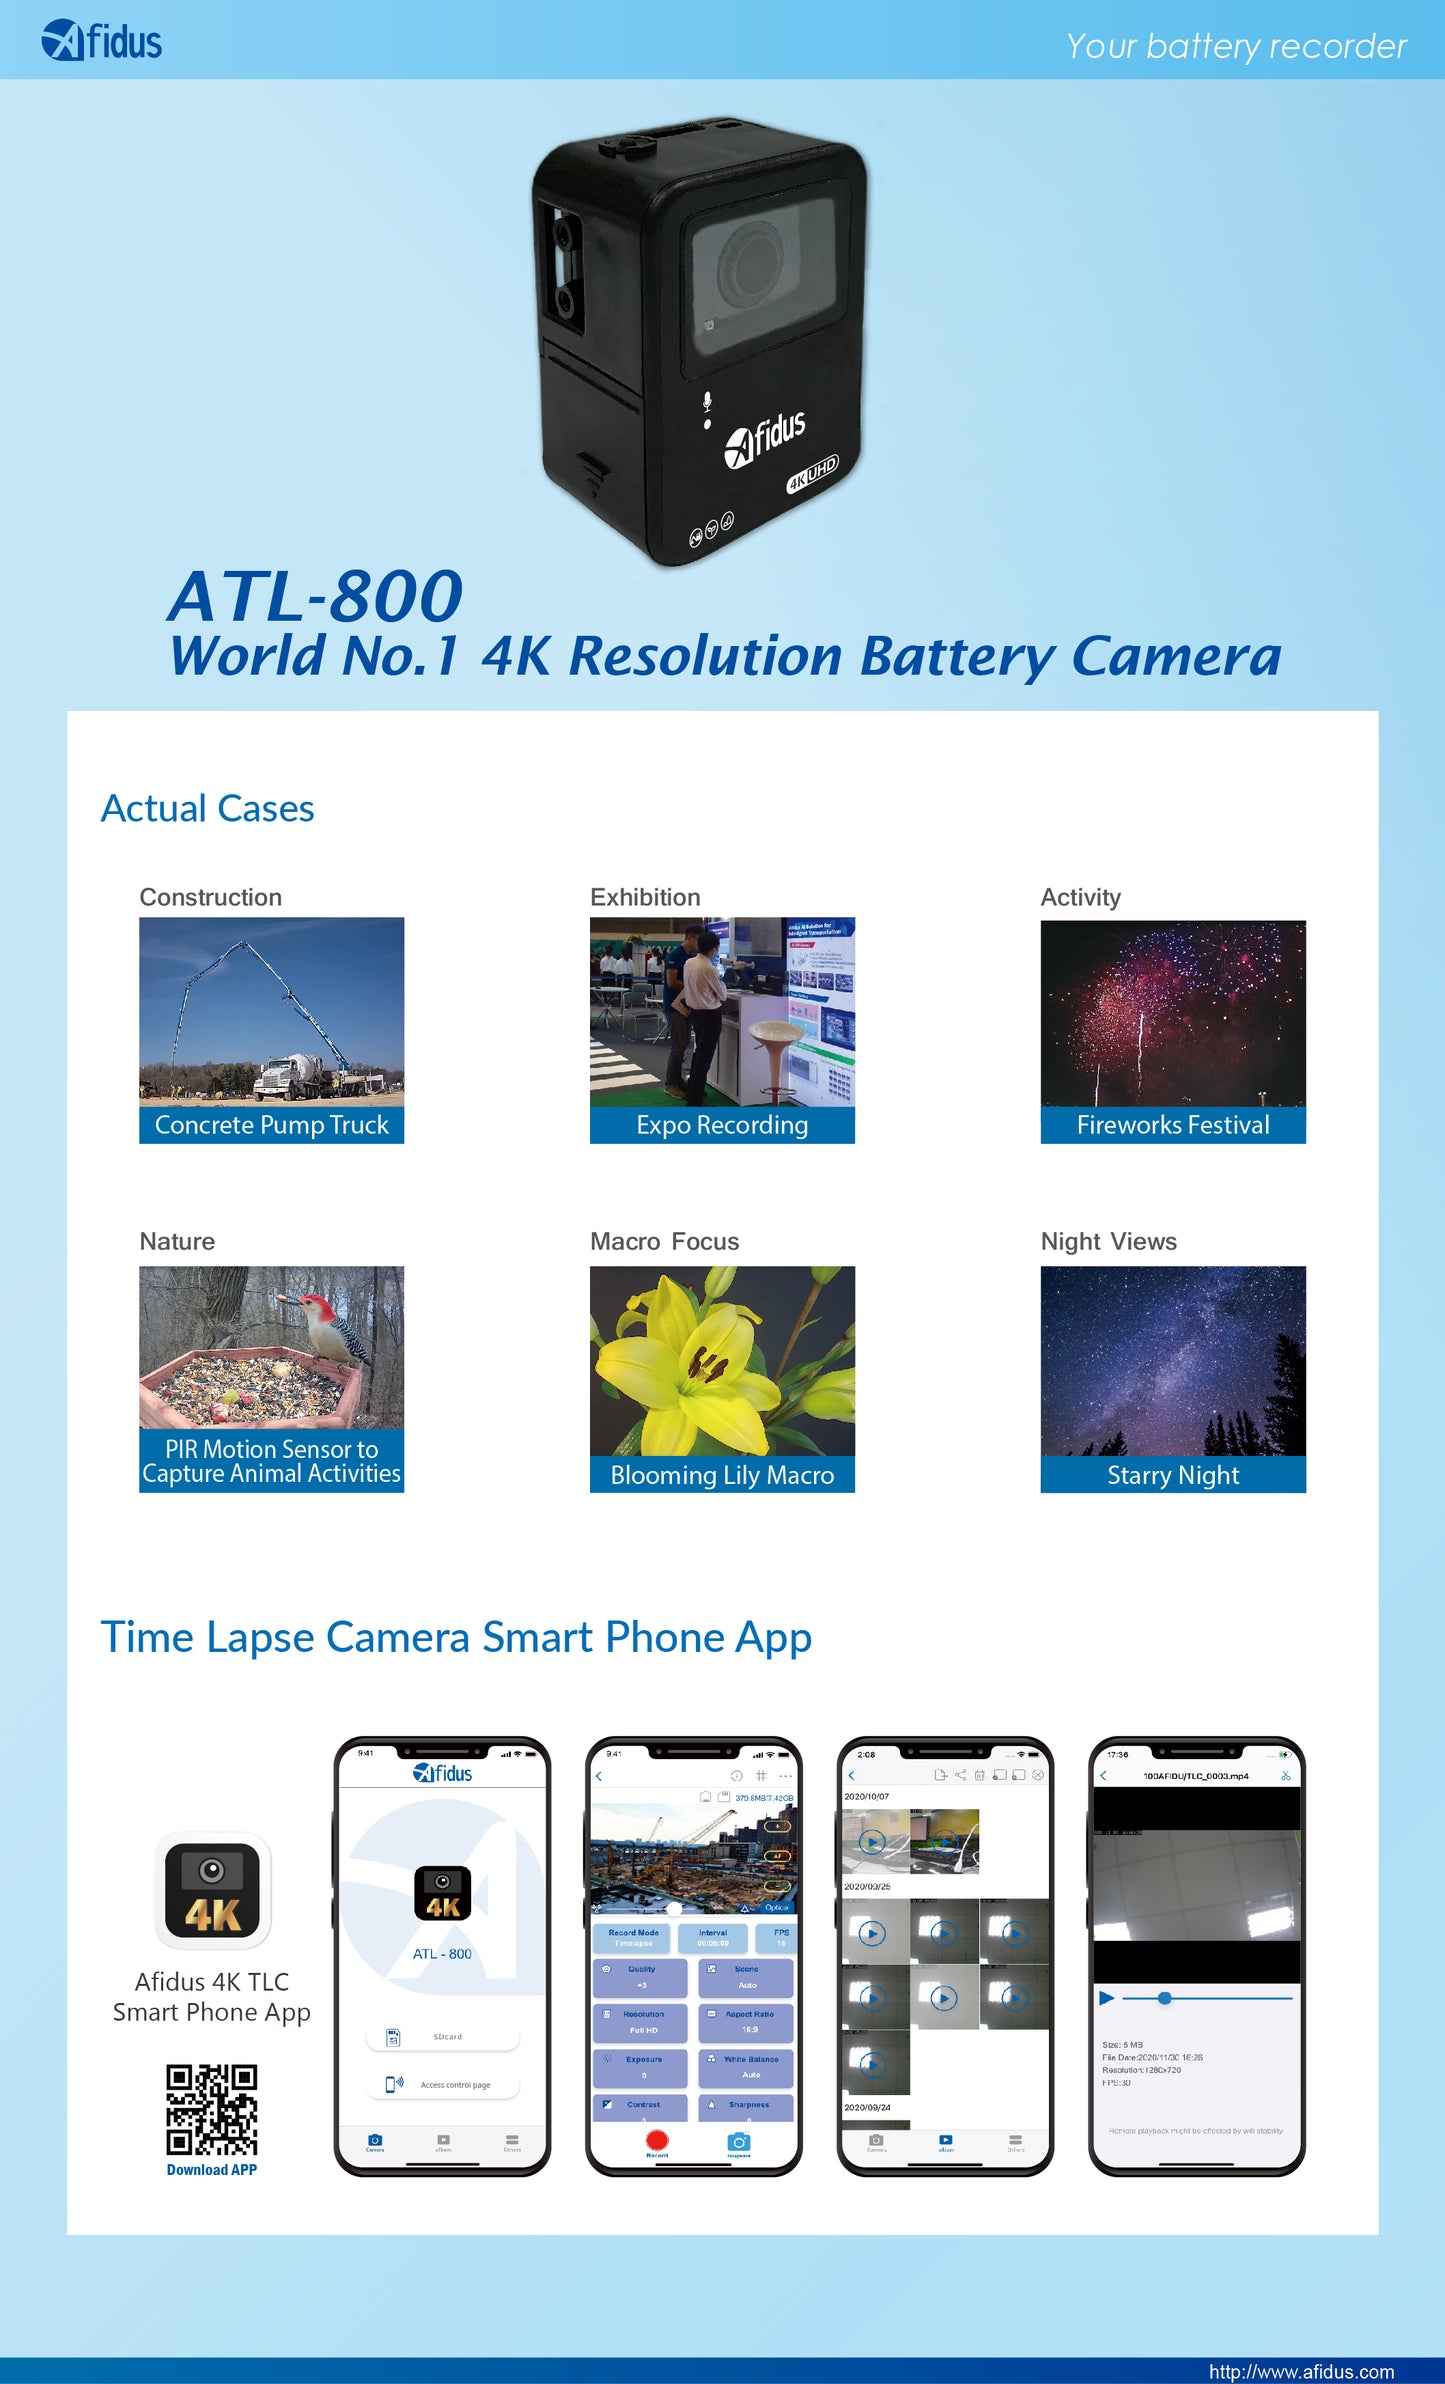 Timelapse Camera ATL-800